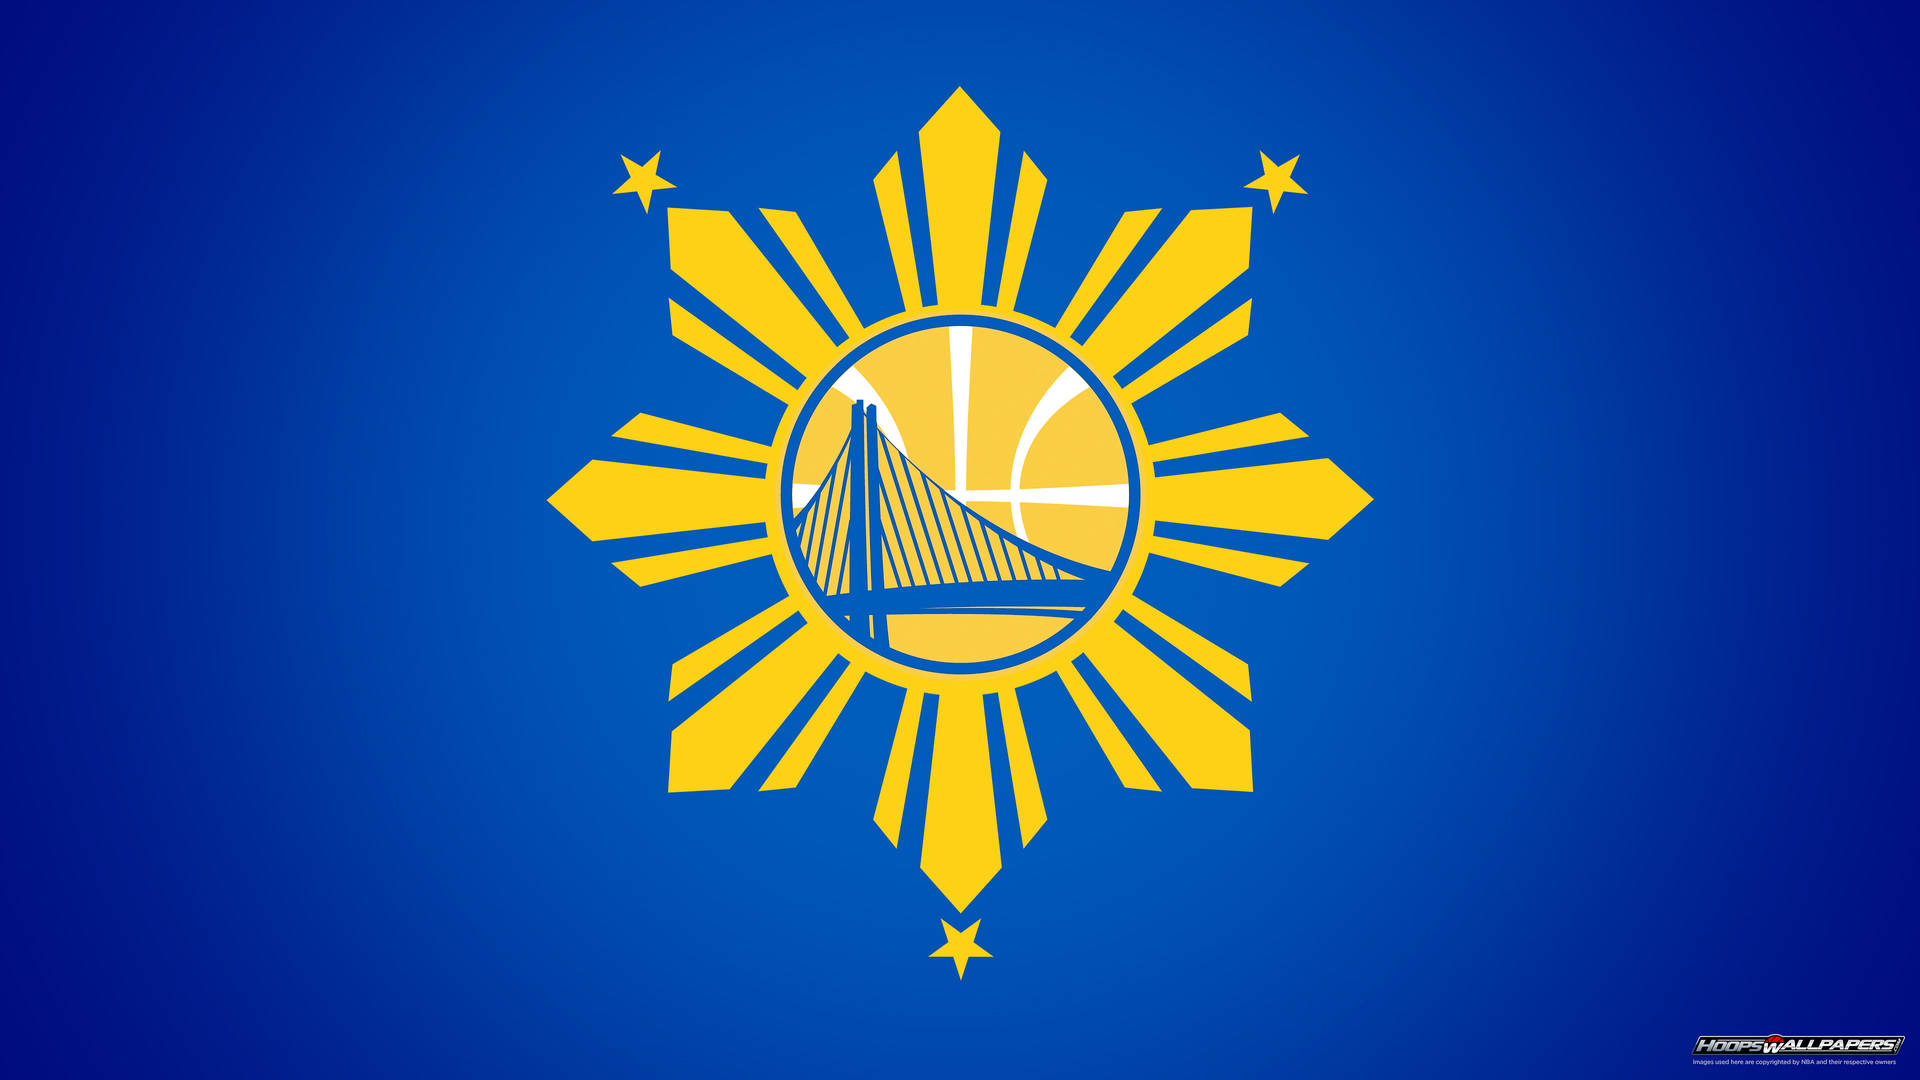 Golden State Warriors Philippine Themed Logo Background